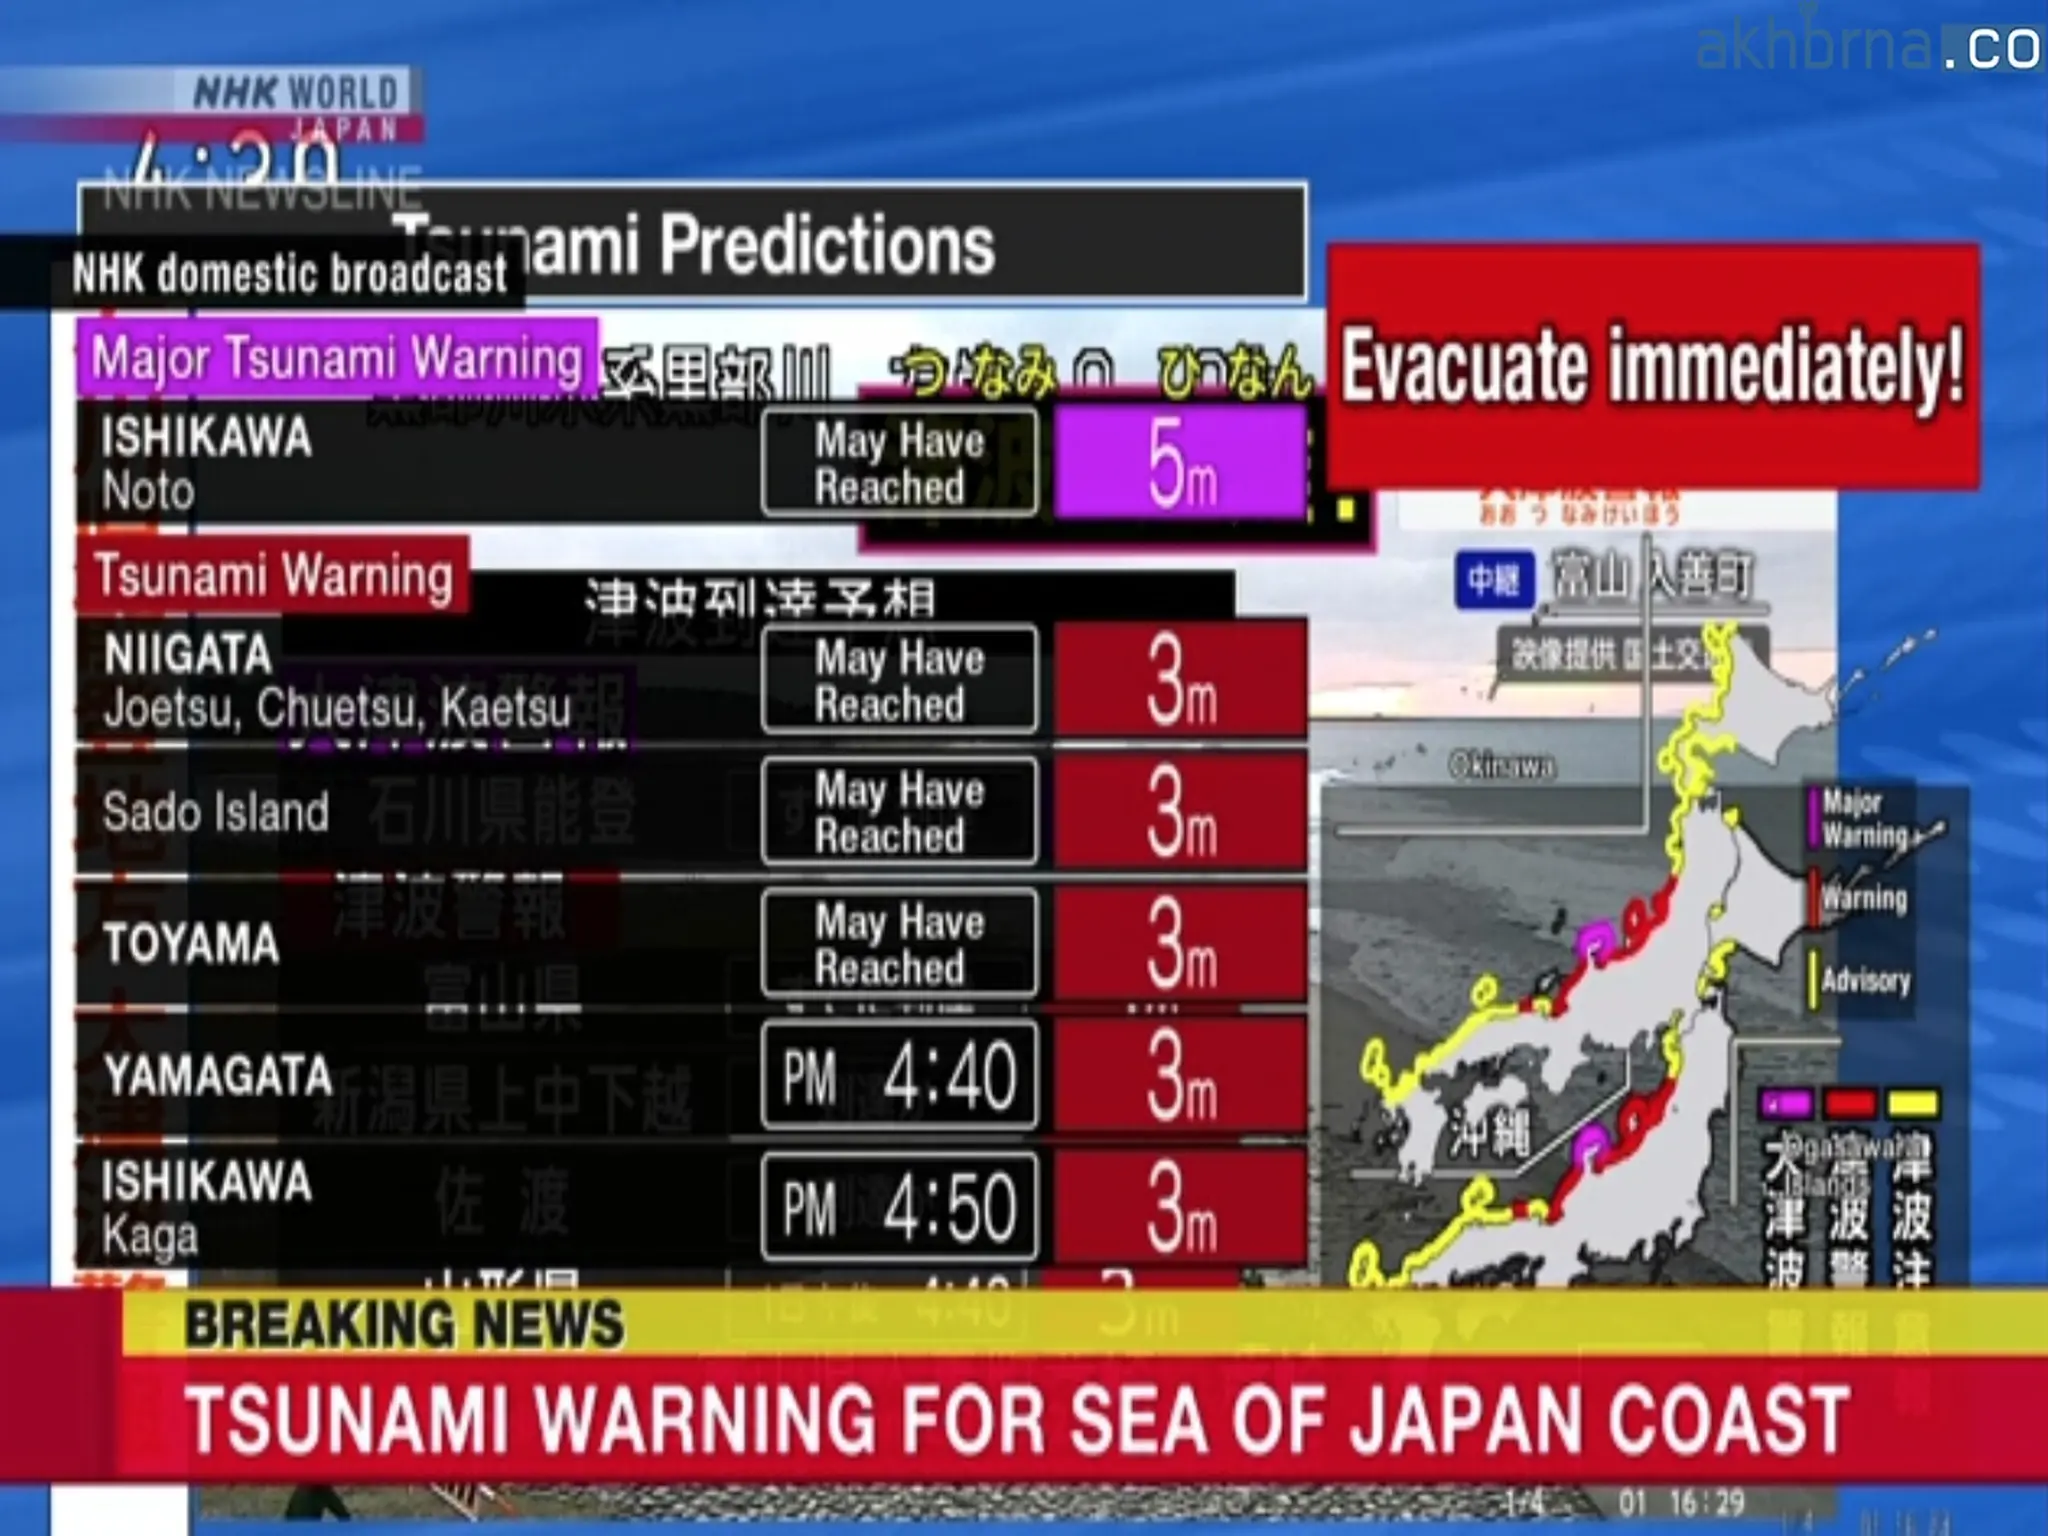 Japan issues tsunami alerts after powerful earthquake, sends evacuation warning